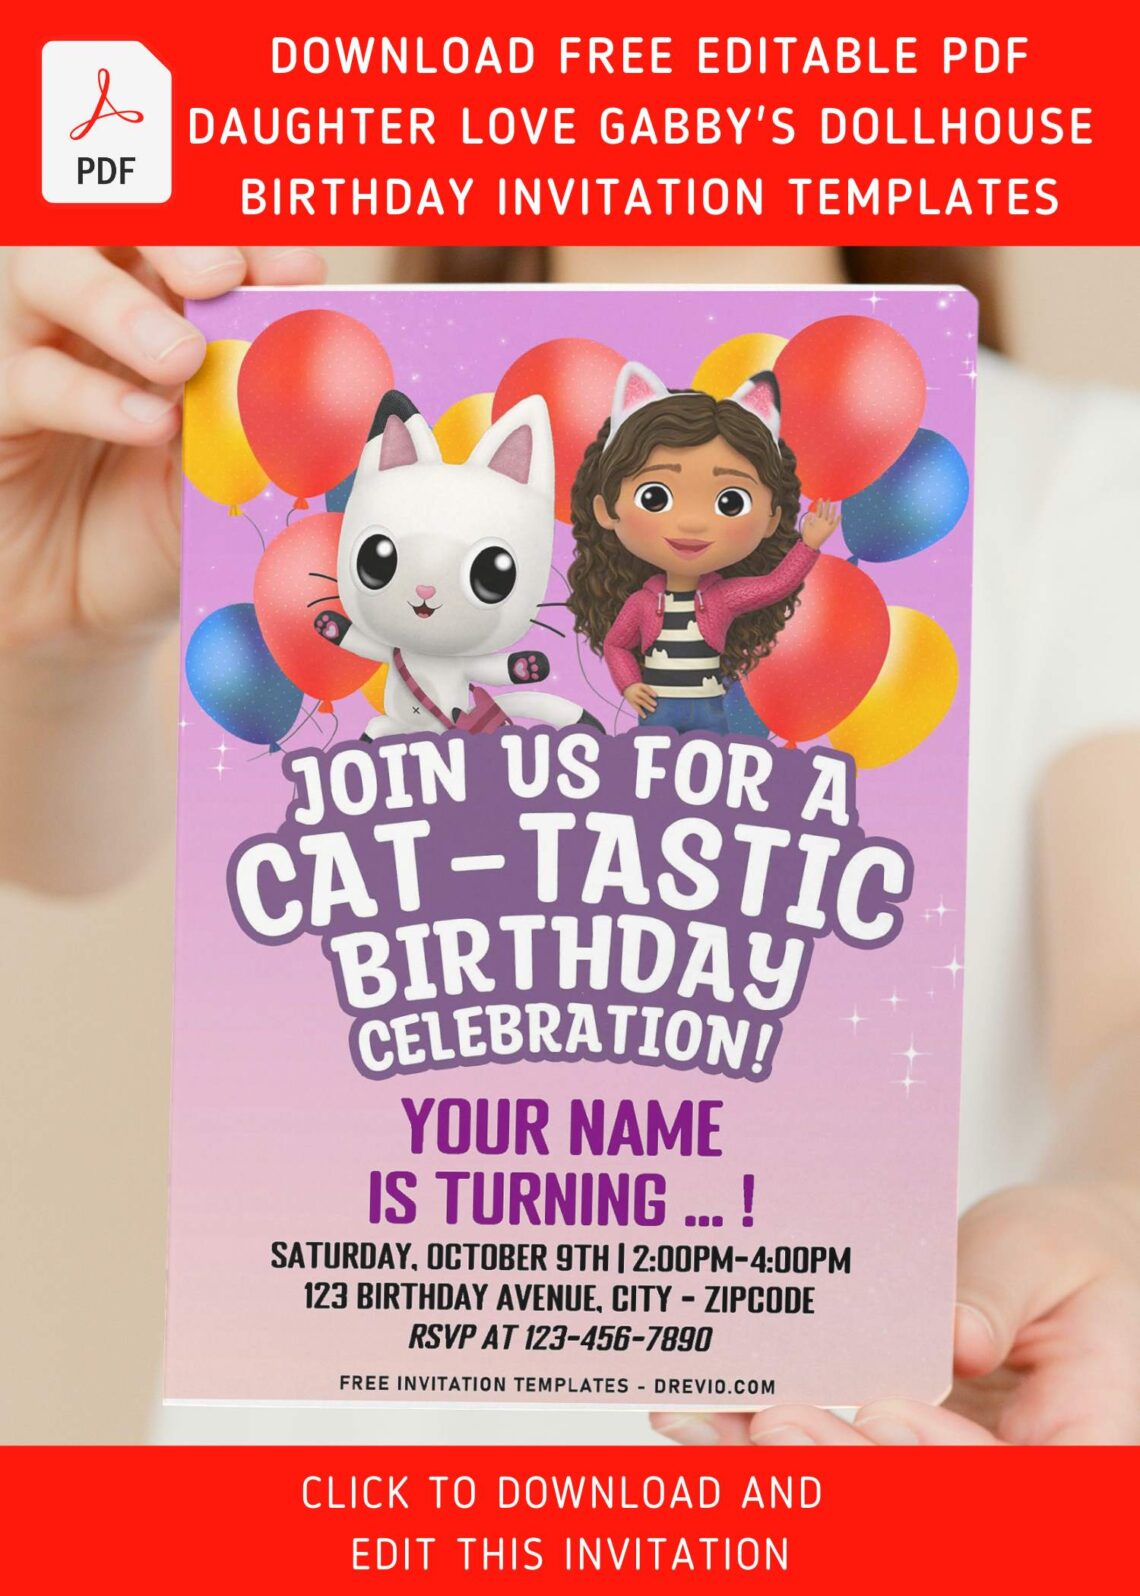 (Free Editable PDF) CAT-TASTIC Gabby's Dollhouse Birthday Invitation Templates with adorable Gabby